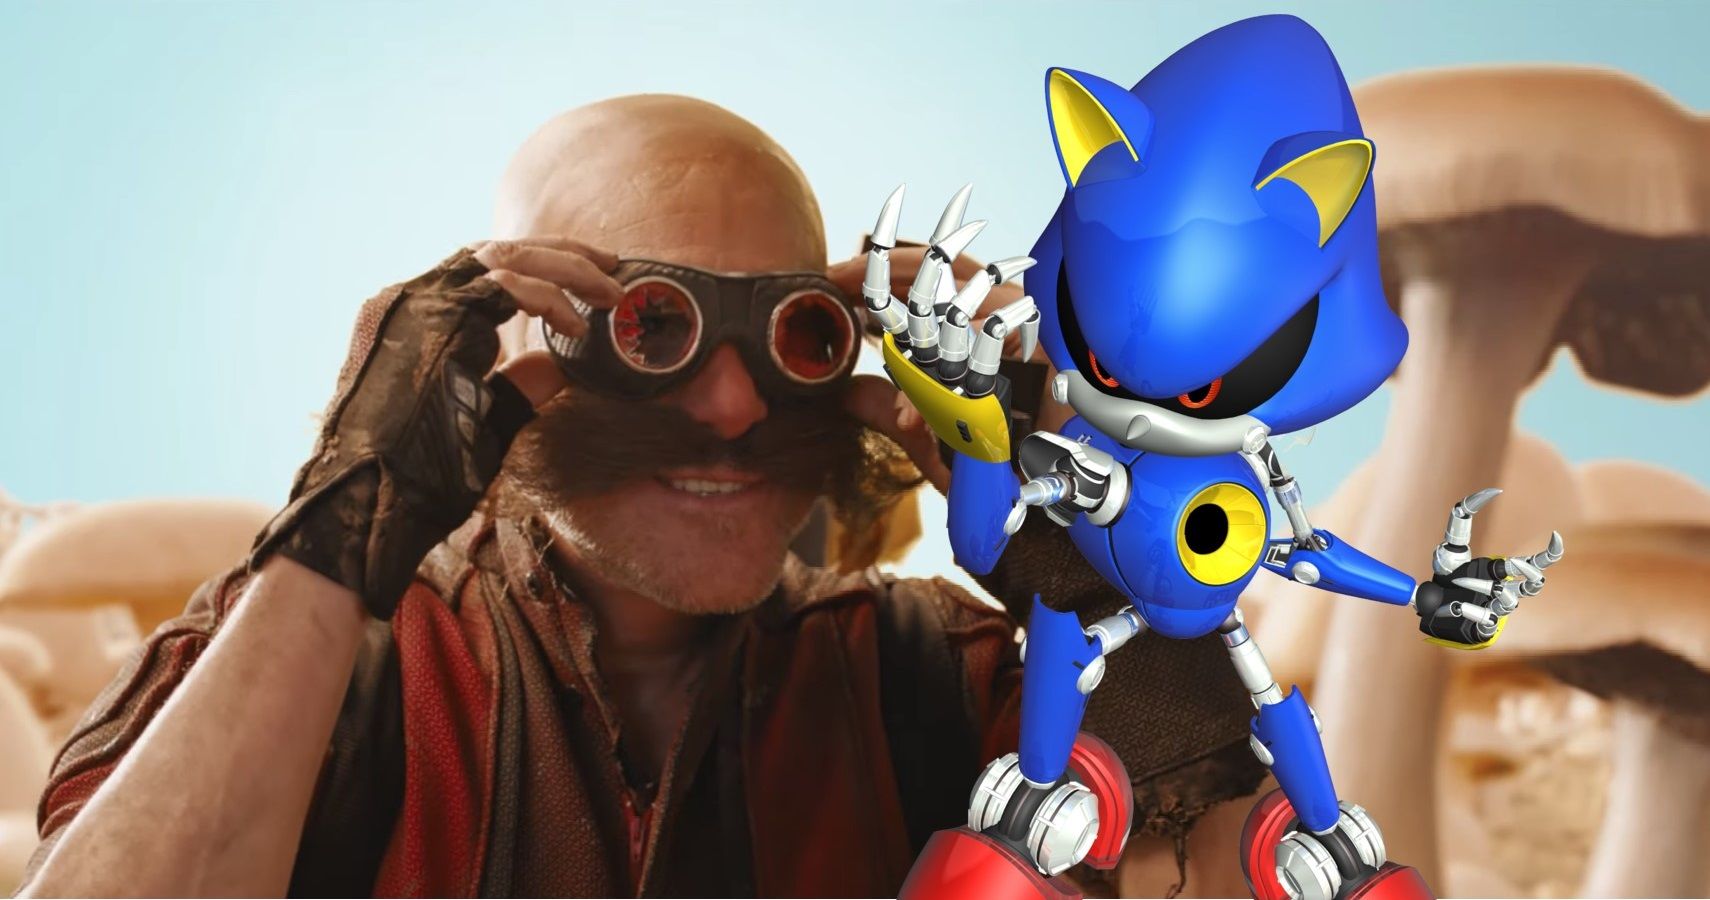 Neo Metal Sonic, Sonic Heroes in 2023